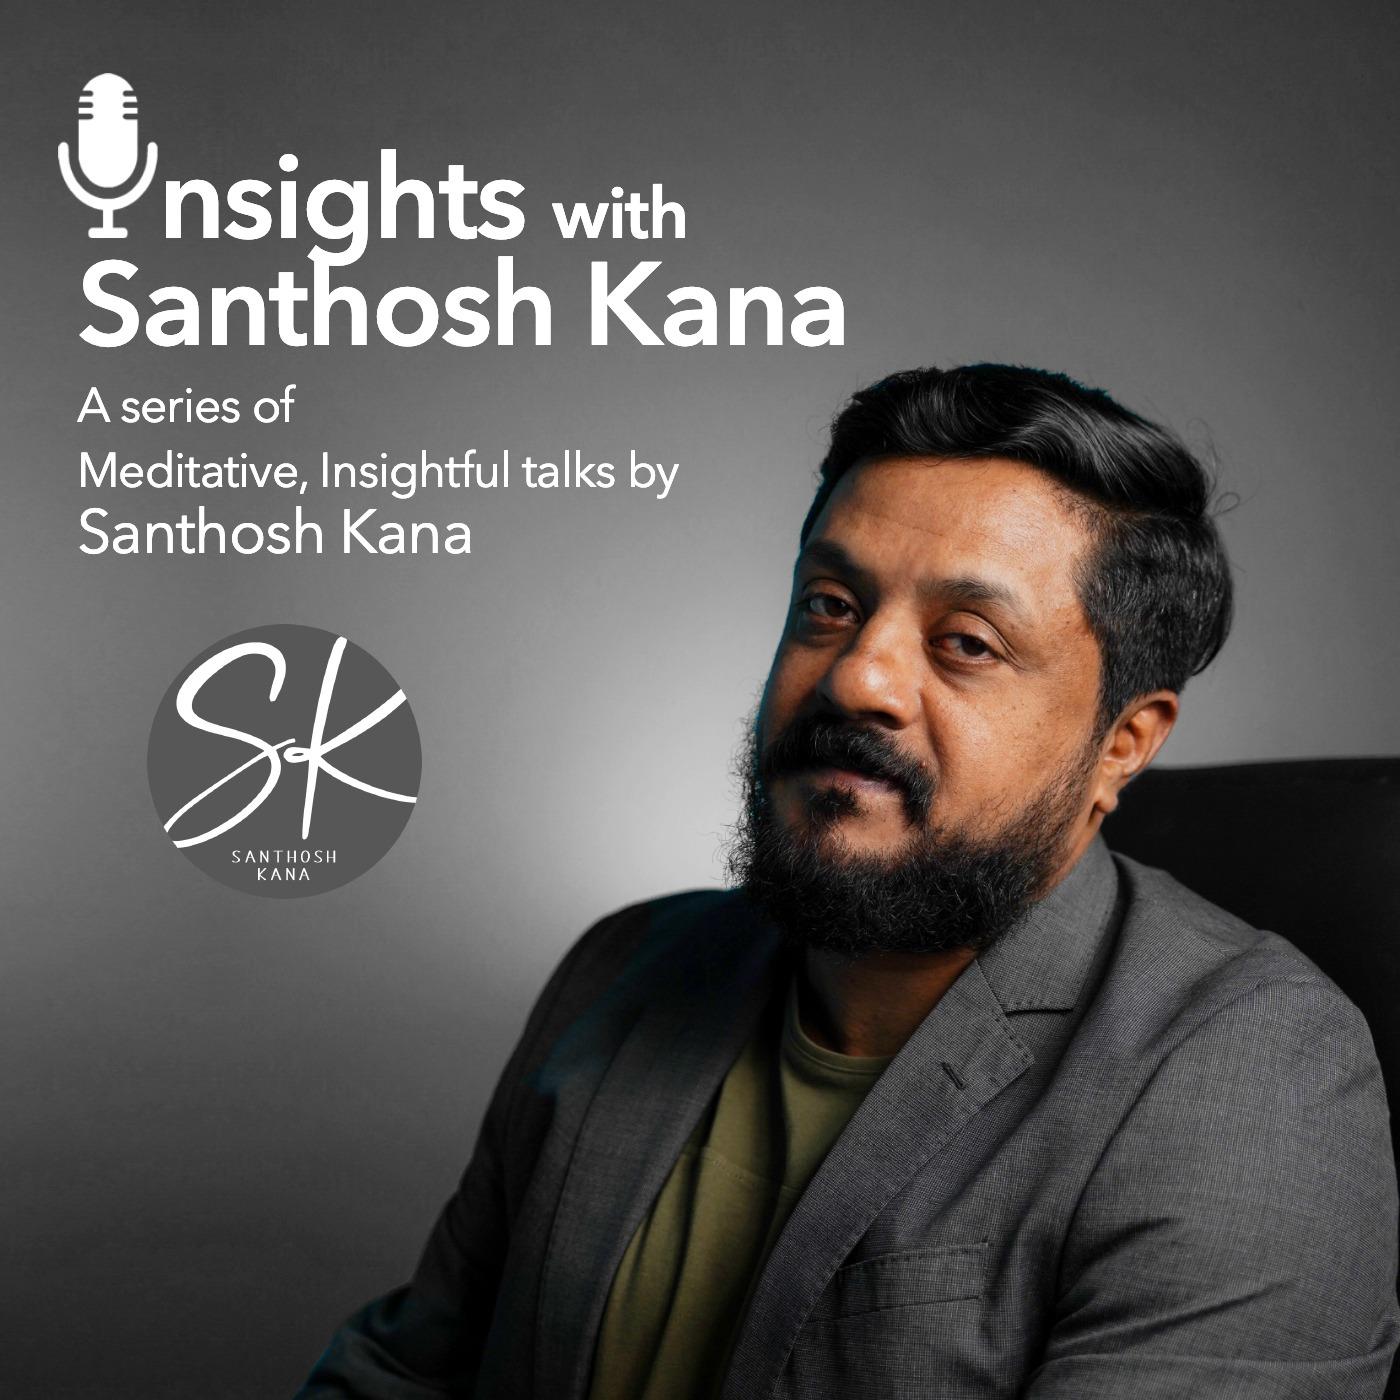 Insights with Santhosh Kana